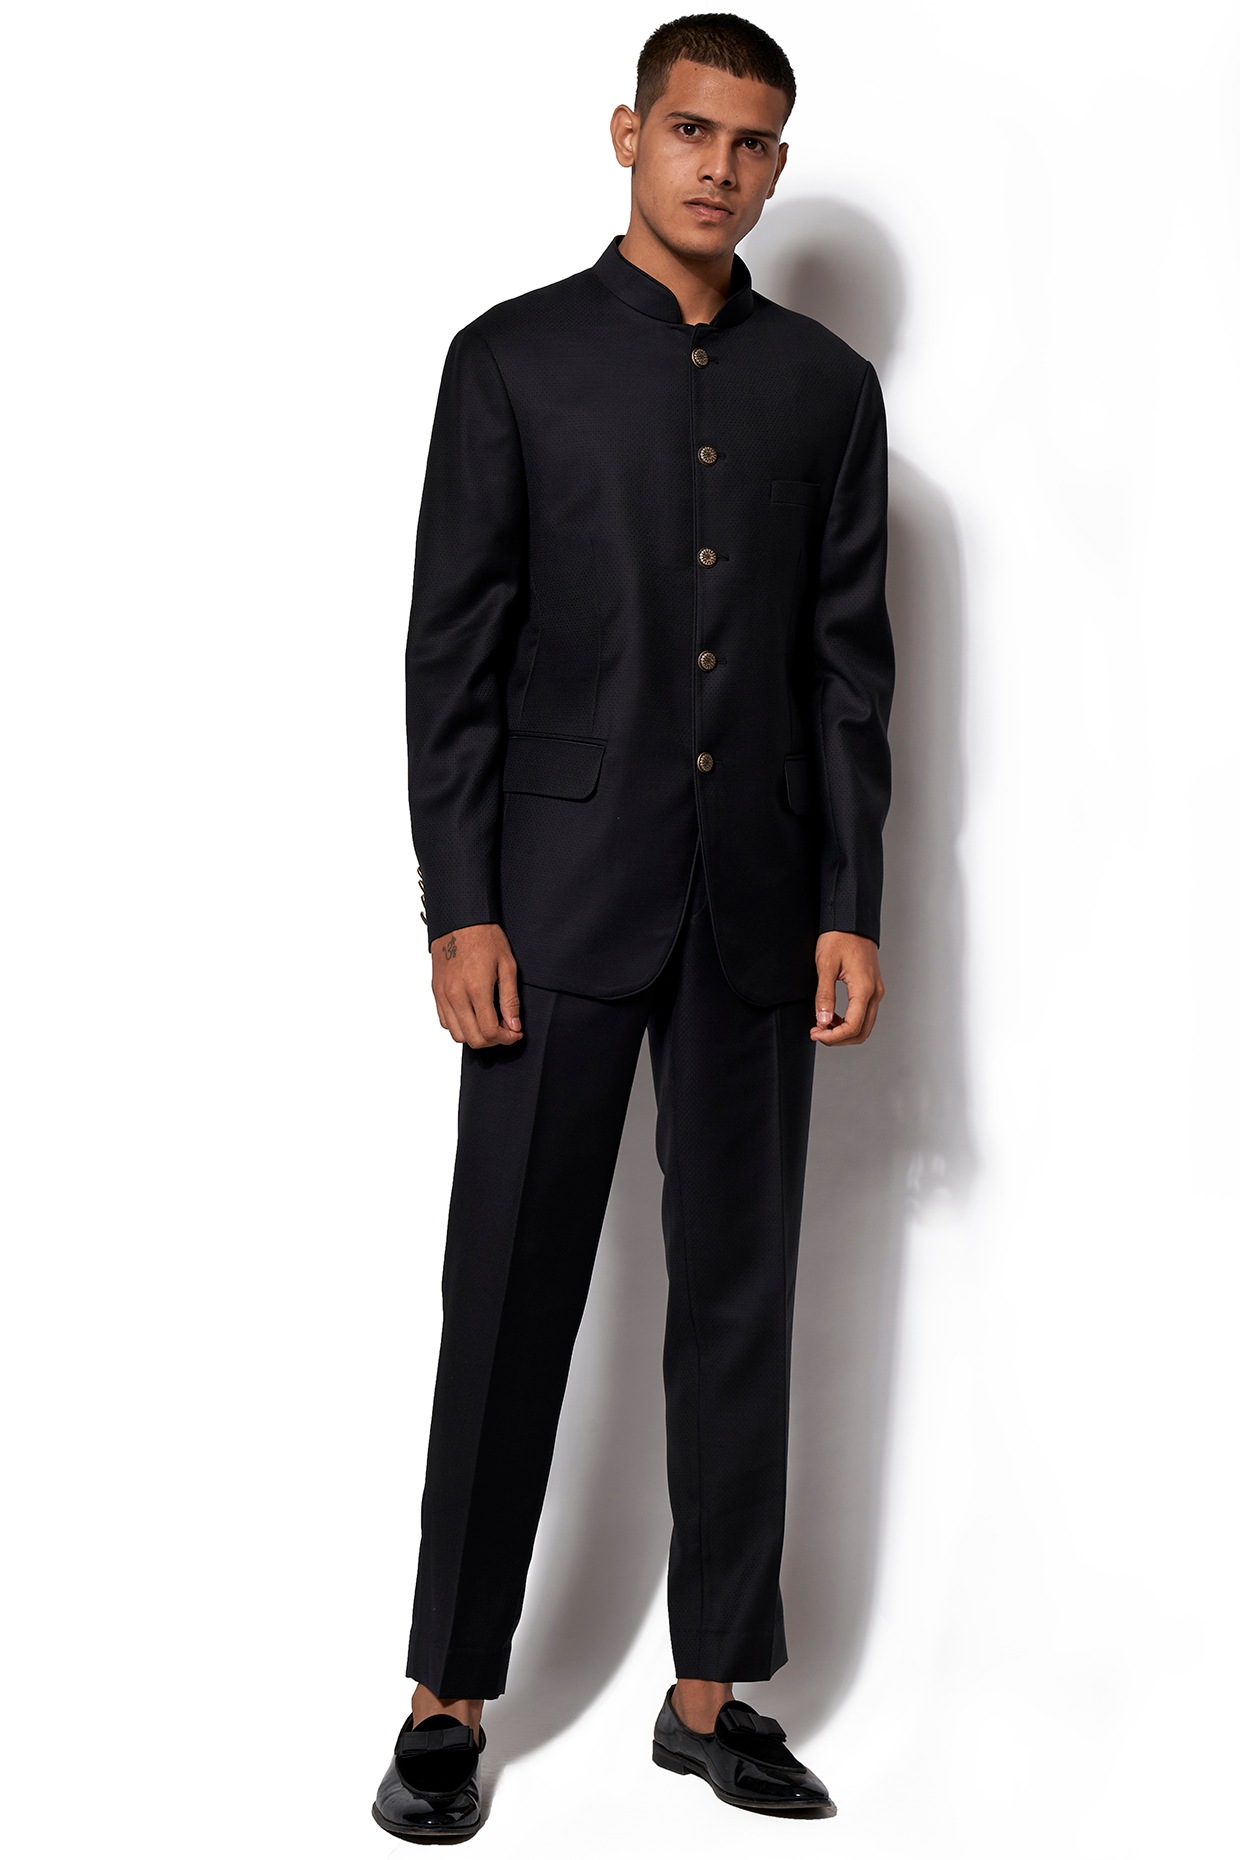 Readymade Black Bandhgala Jodhpuri Suit For Men Latest 790MW05